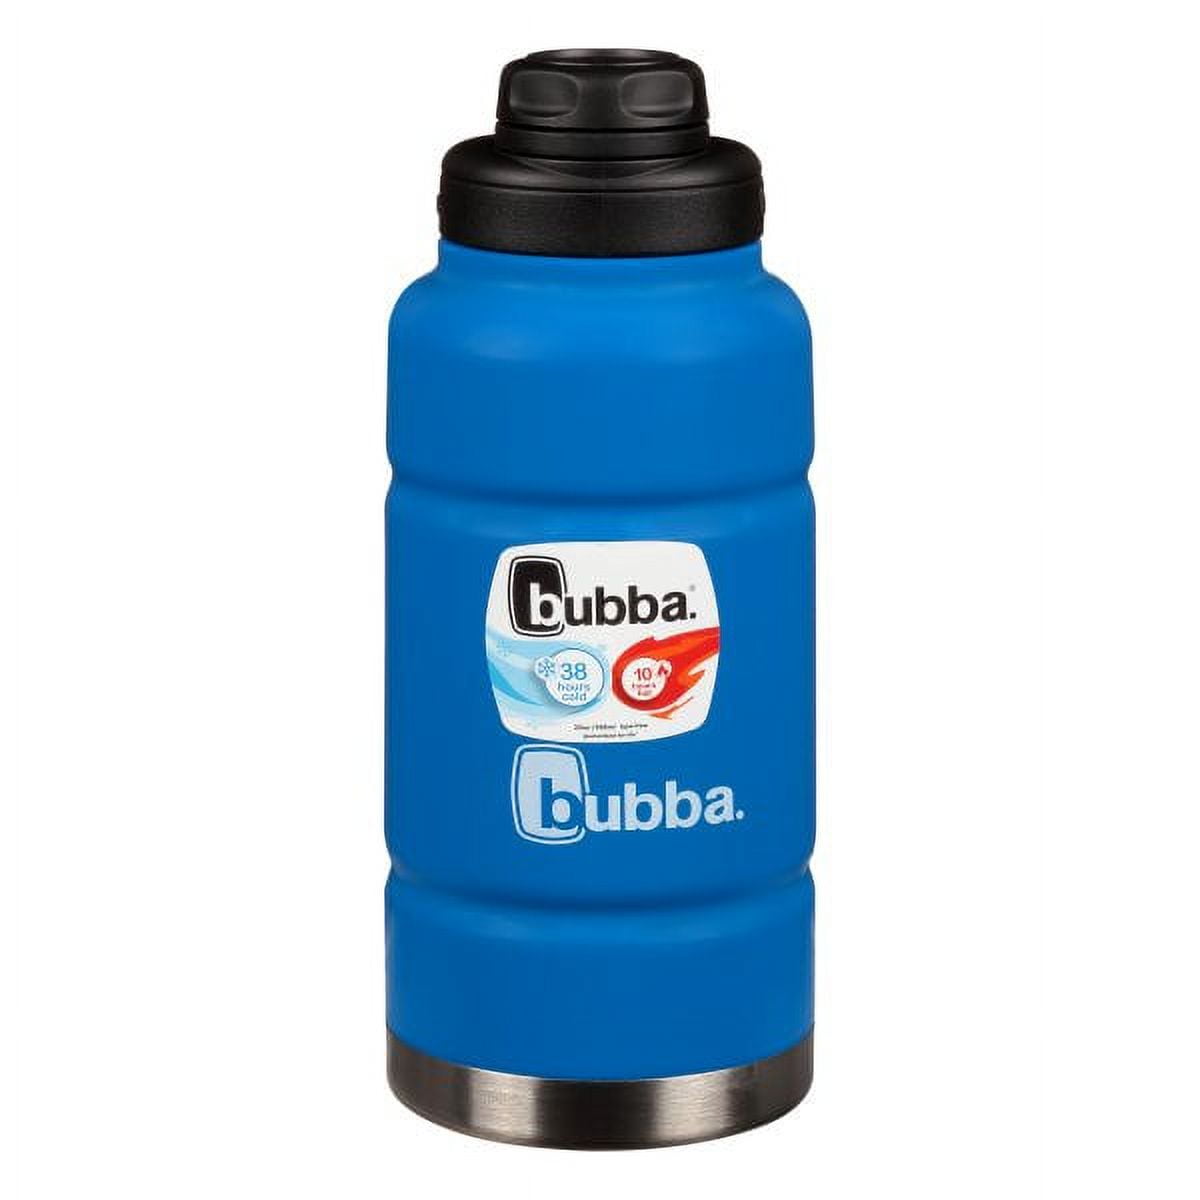 Bubba - Bubba, Raptor - Sport Bottle, Insulated, 11 oz